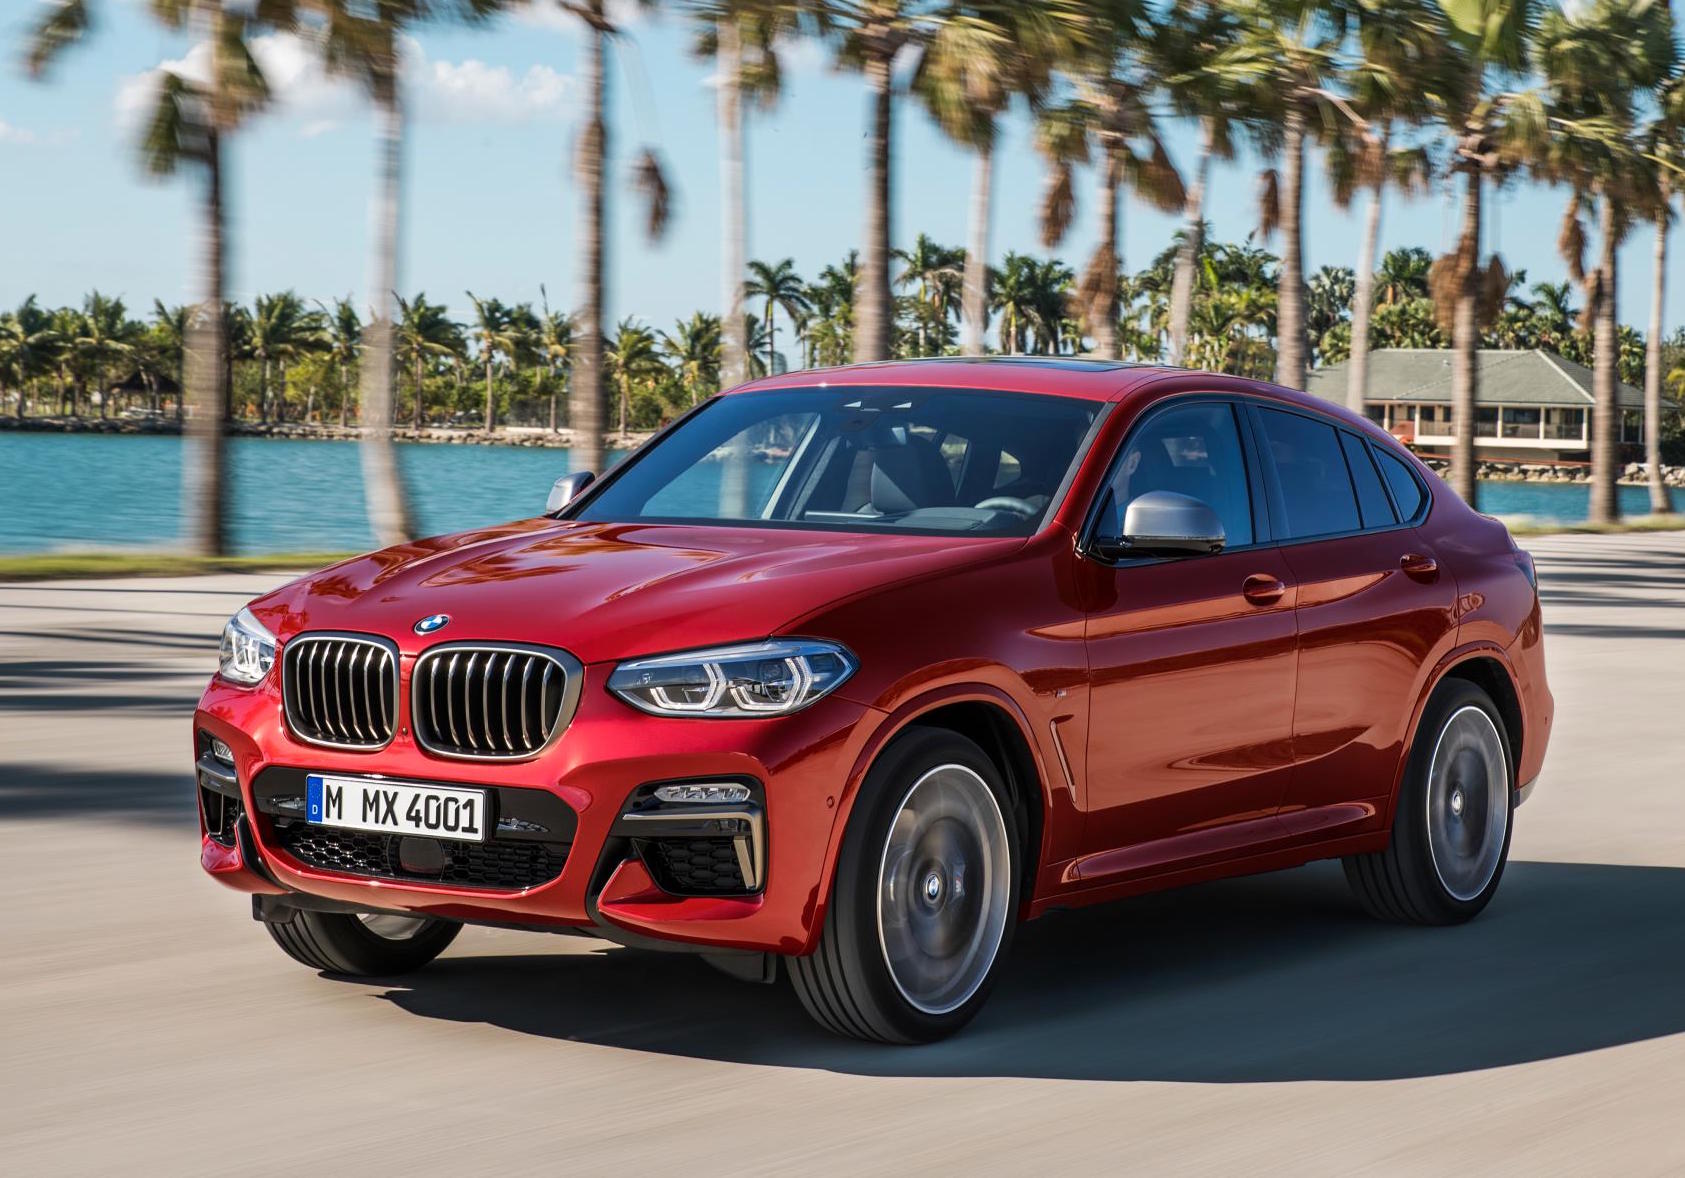 2018 BMW X4 revealed, M40d performance diesel confirmed